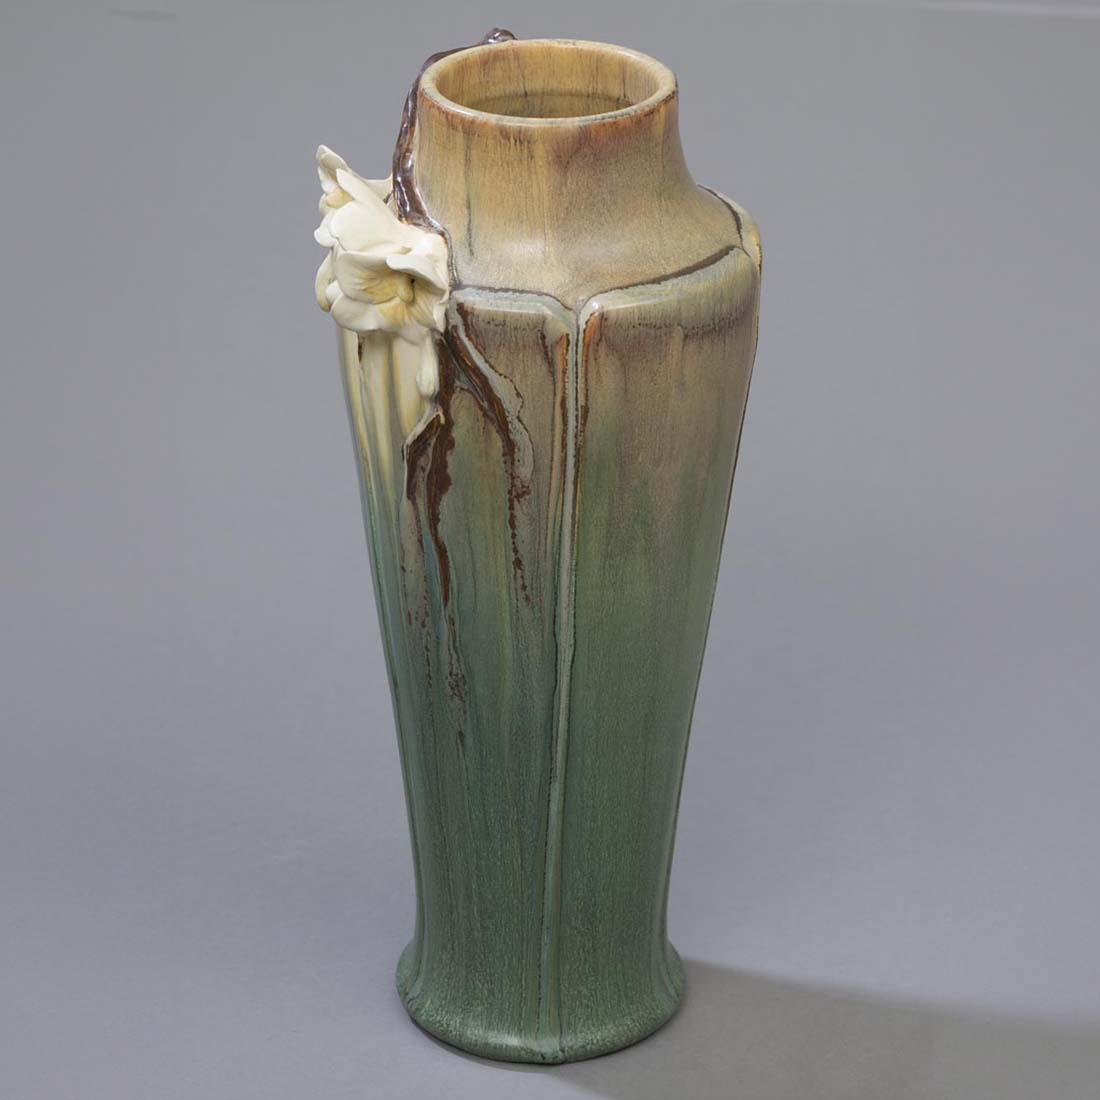 Blooming Branch Ceramic Pottery Vase